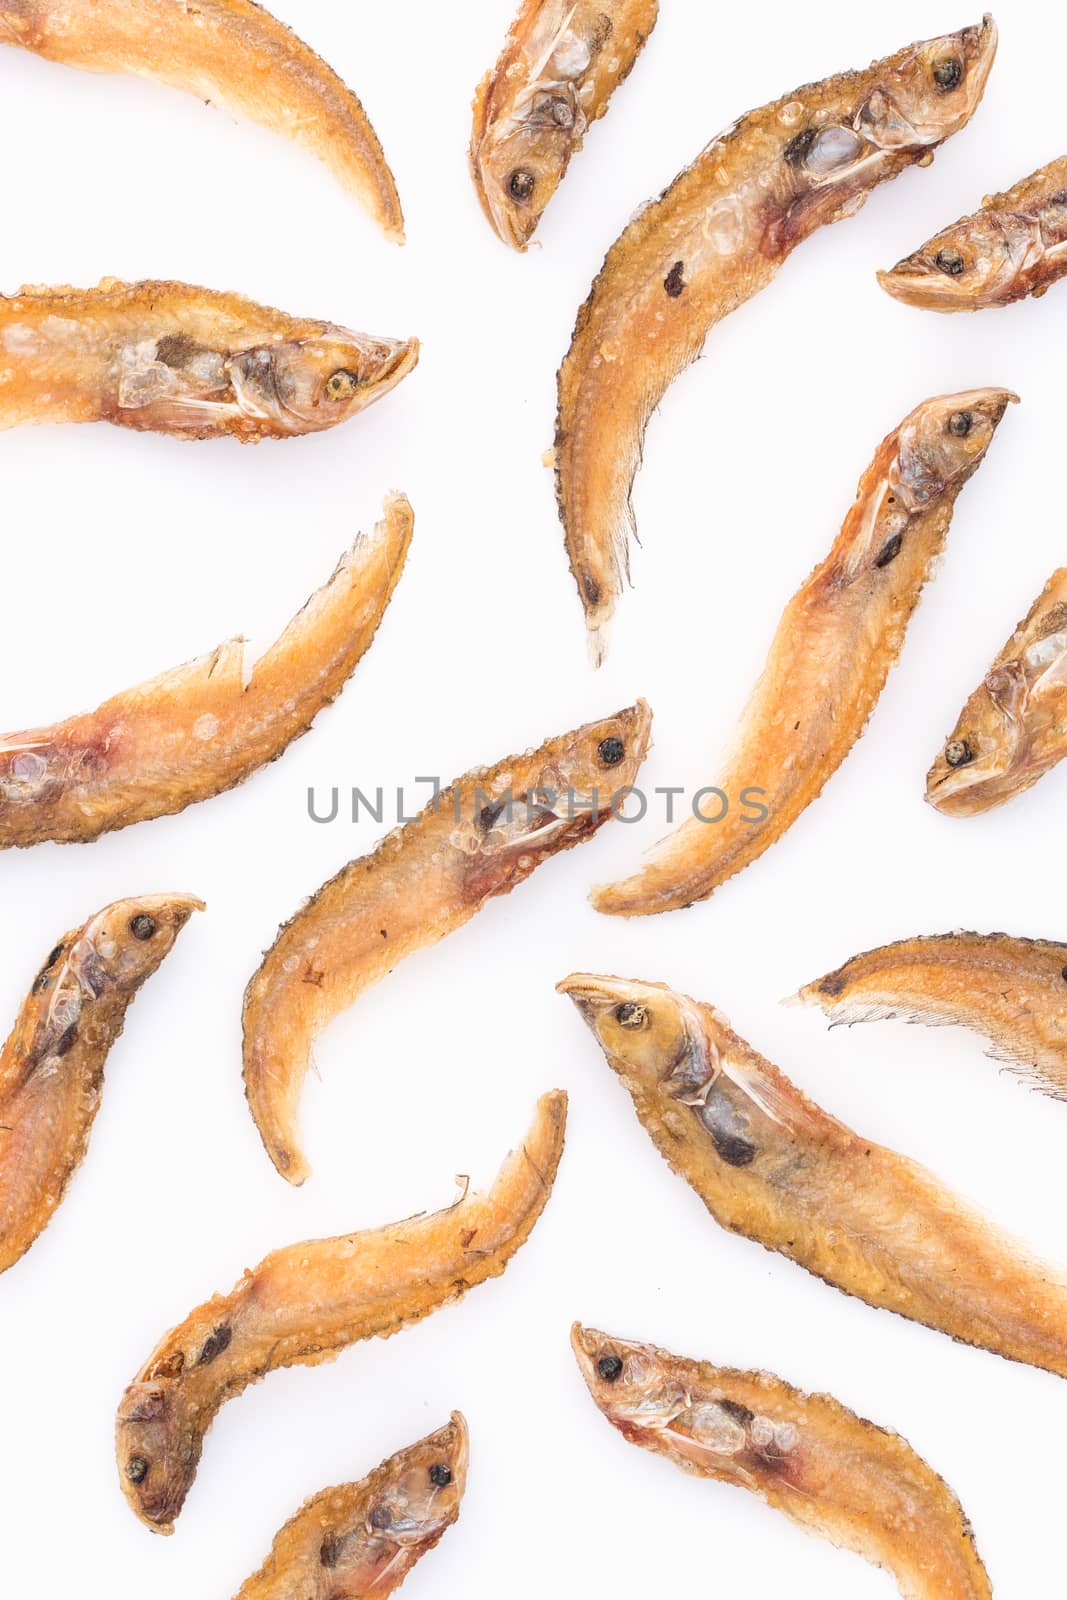 Sheatfish fried by AEyZRiO